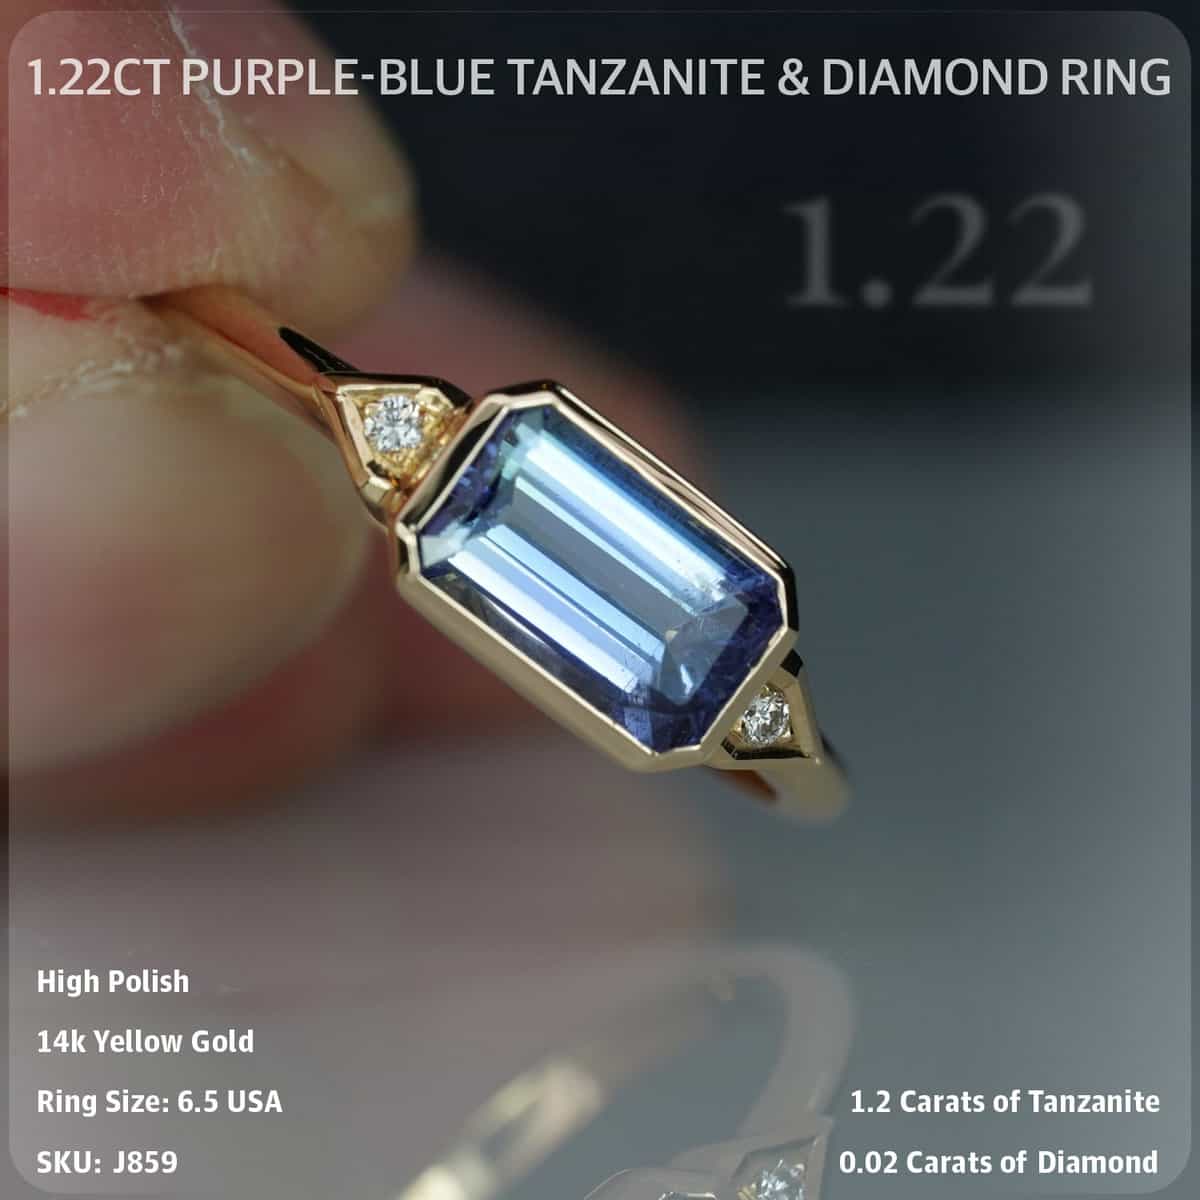 1.22CT Purple-Blue Tanzanite & Diamond Ring